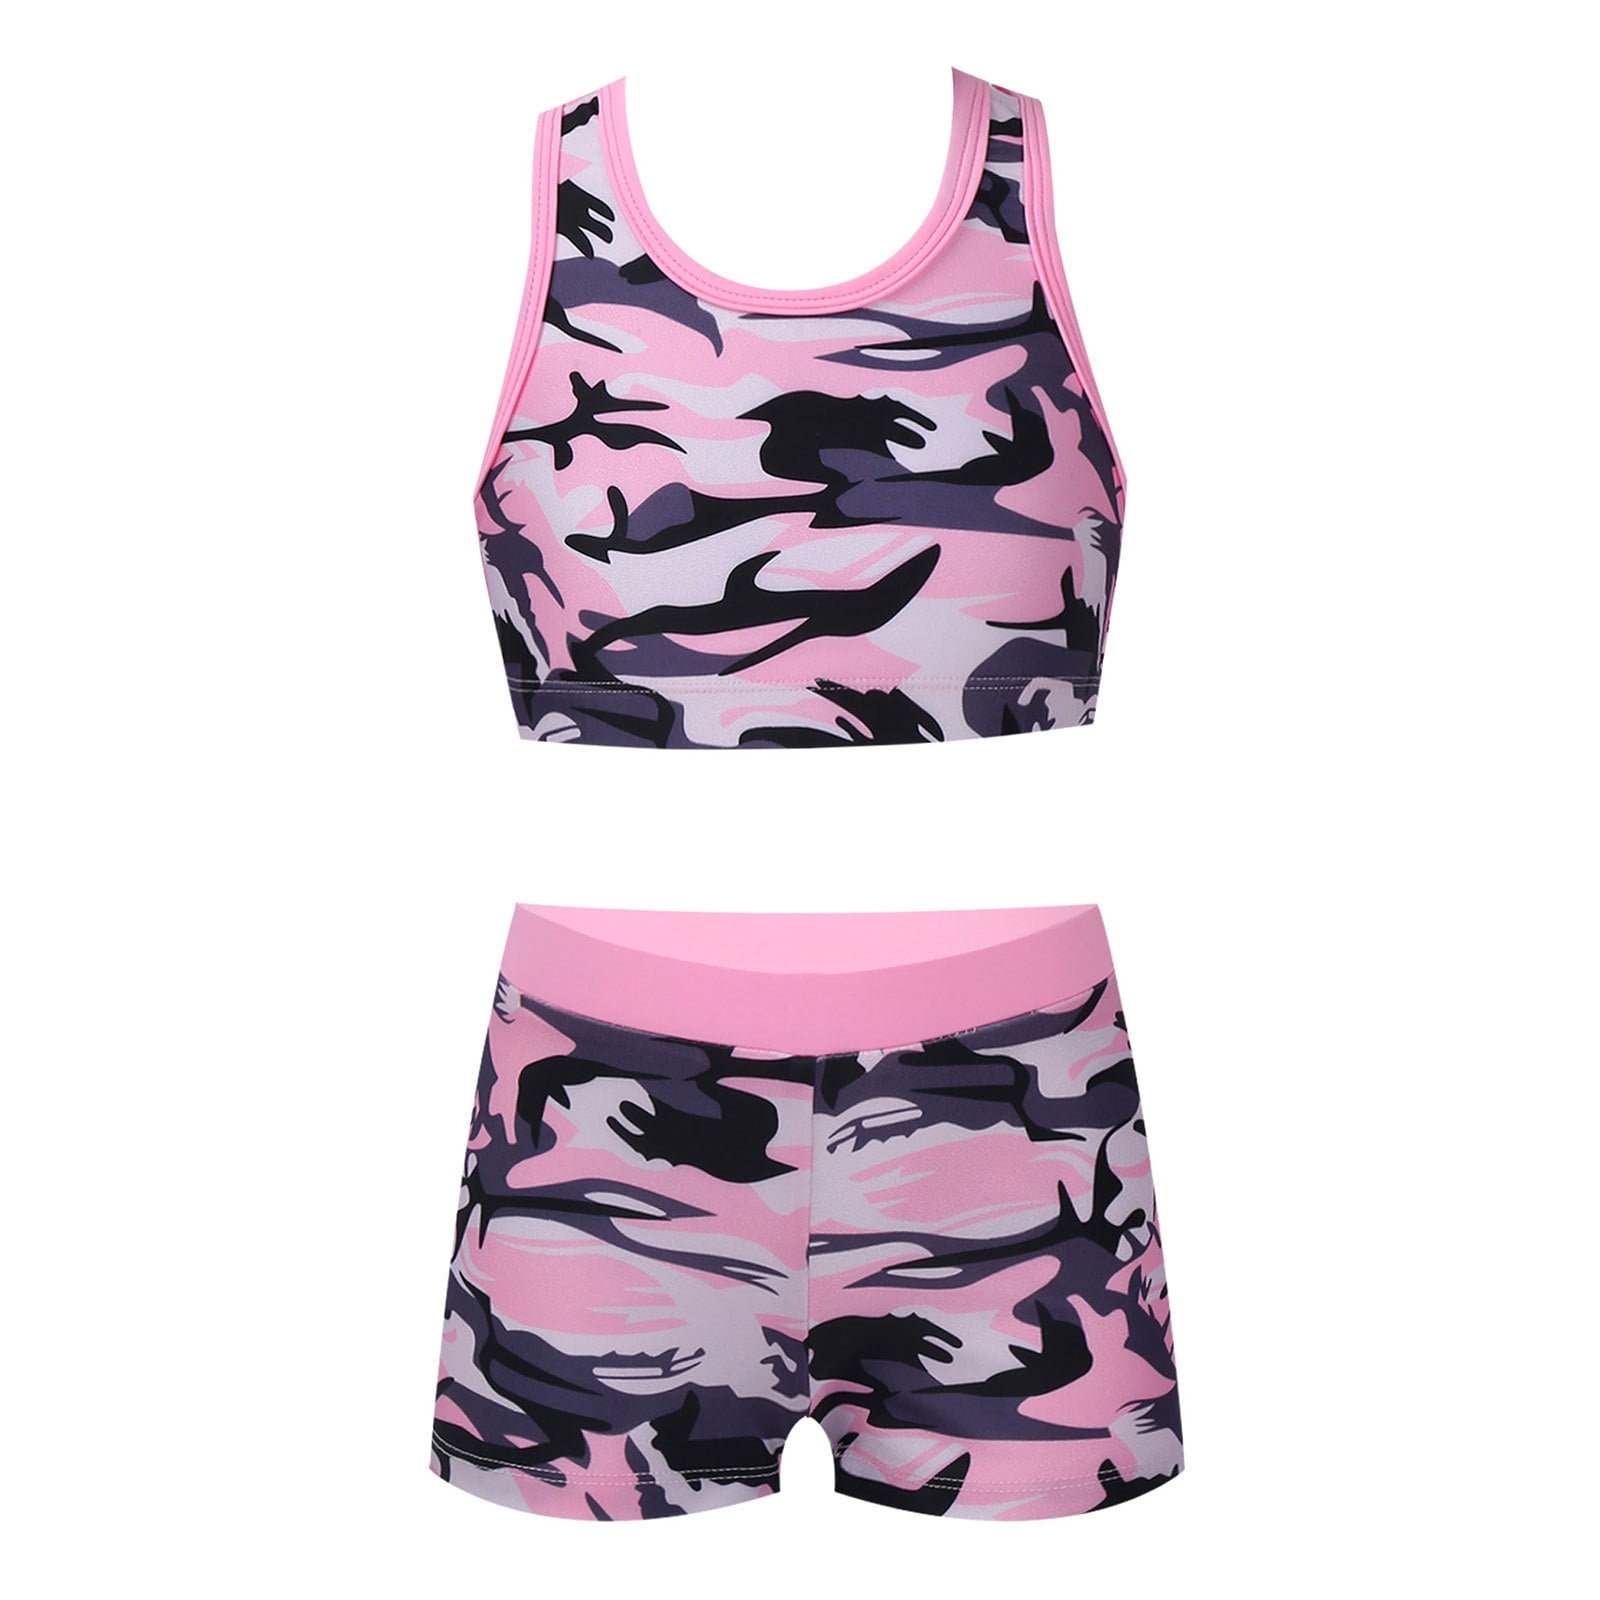 inhzoy Kids Girls Camouflage Print Swimsuit 2PCs Swimwear Tankini